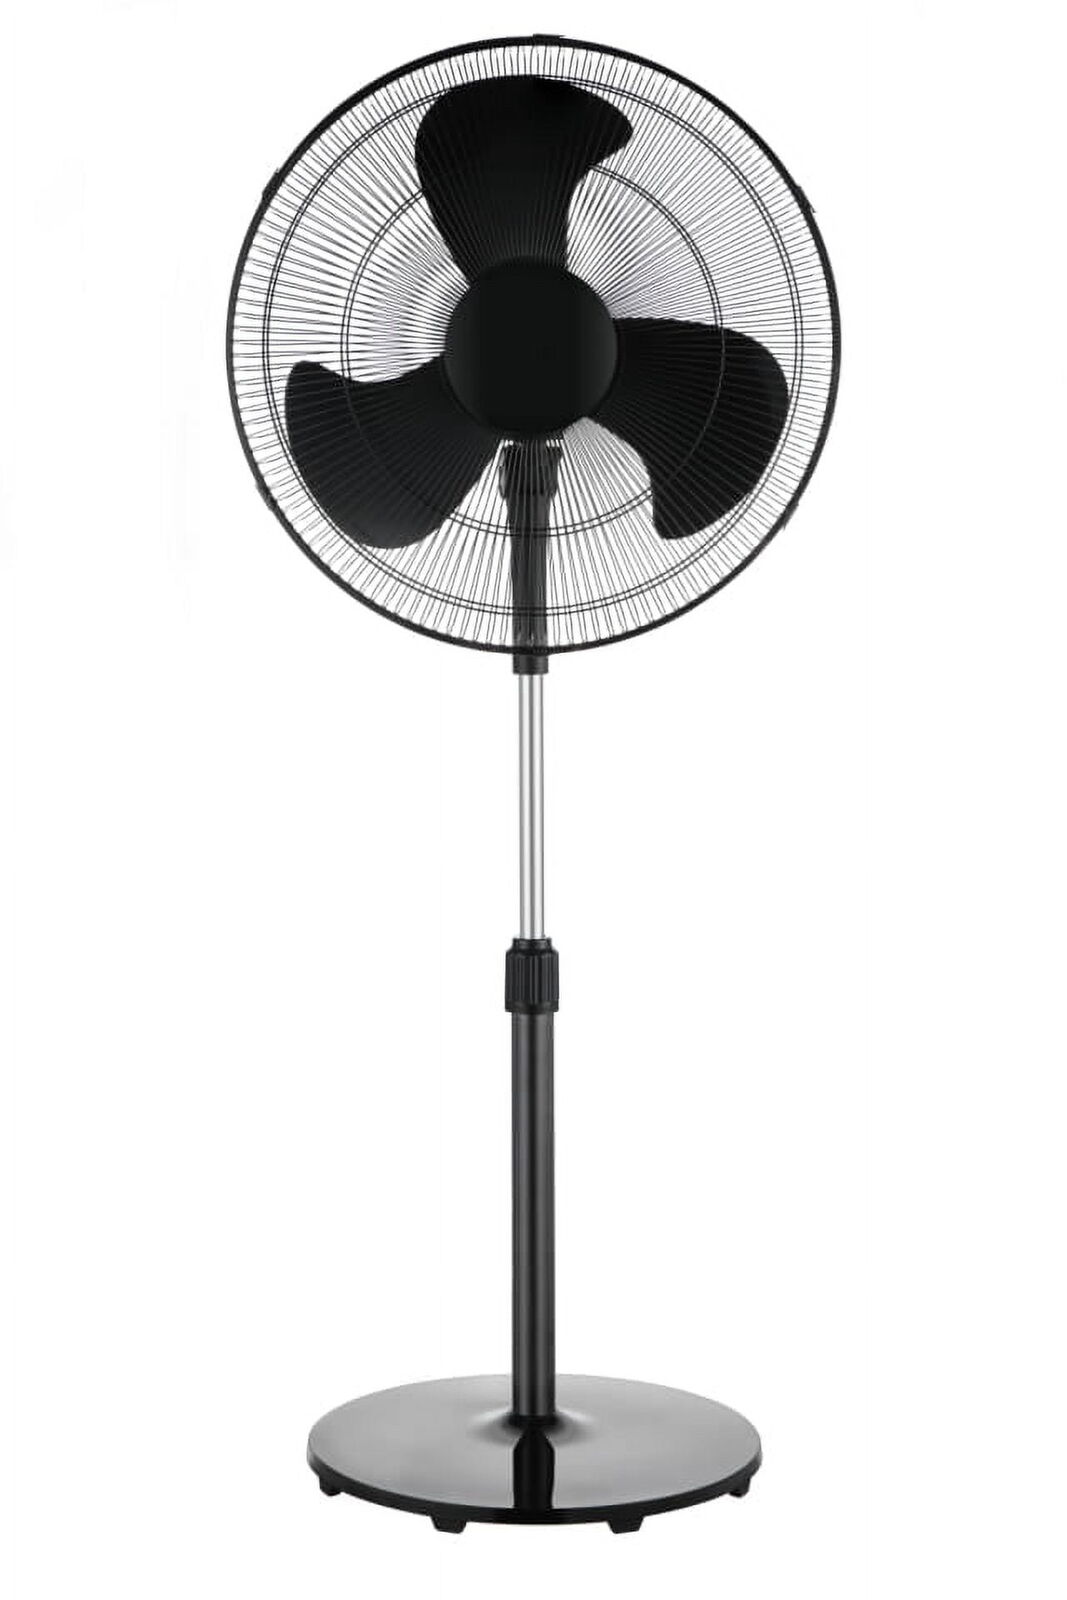 Mainstays 18-inch Oscillating 3-Speed Pedestal Fan with Tilt Adjustable Fan Head